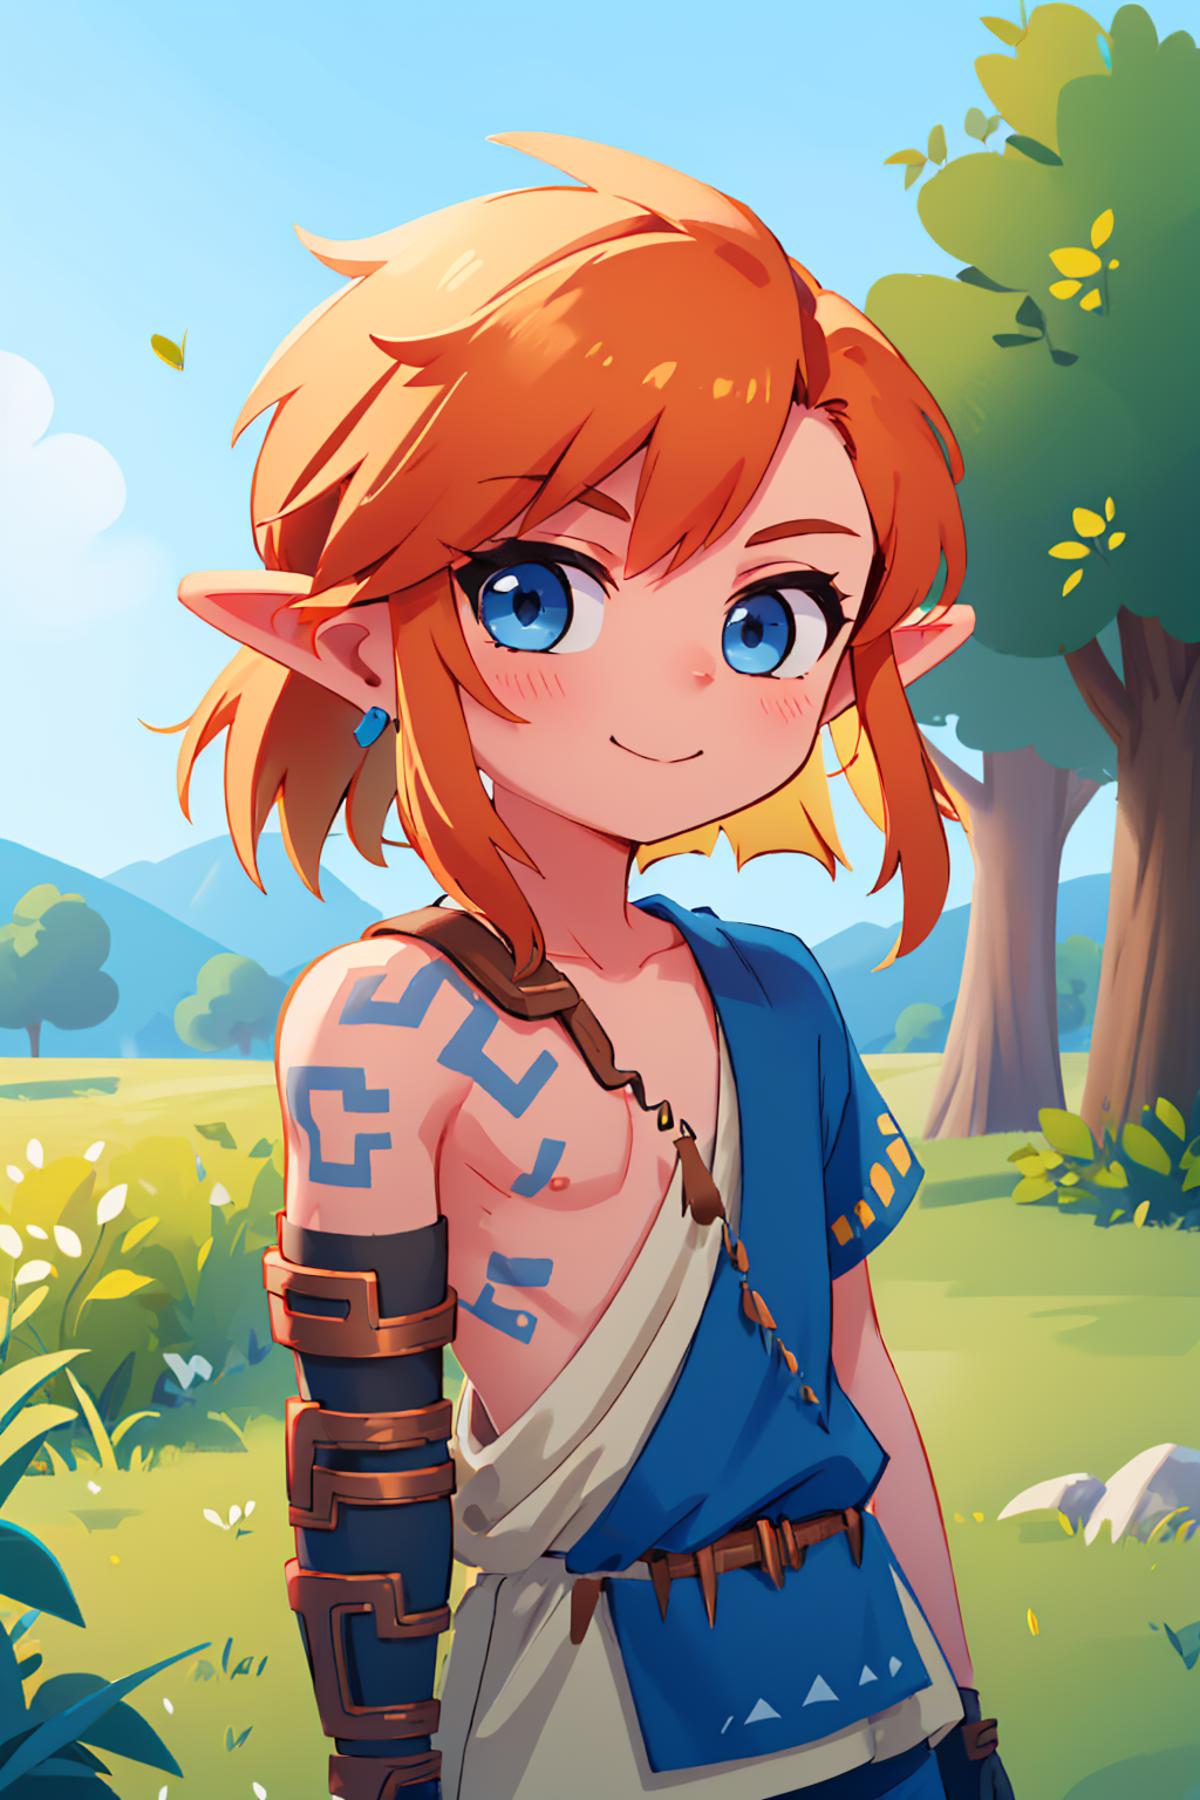 Link | The Legend of Zelda: Tears of the Kingdom image by justTNP